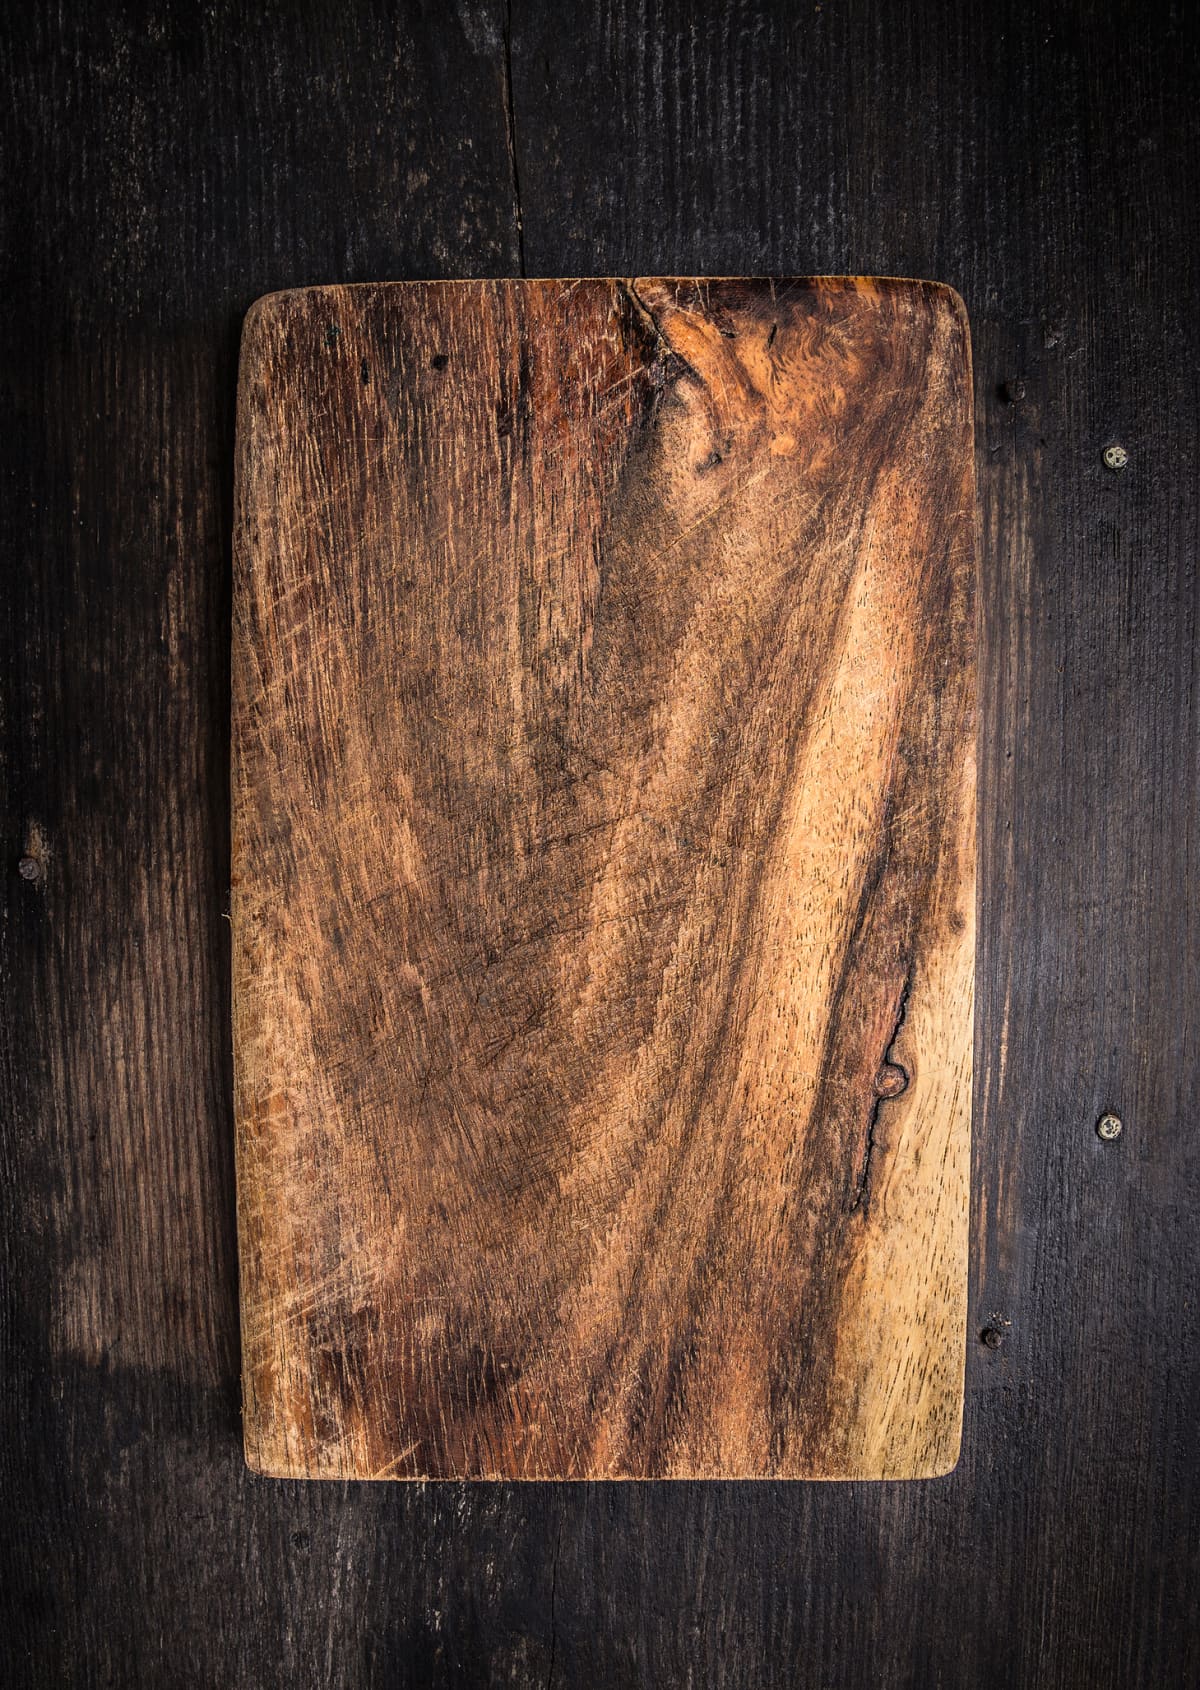 Rustic wooden cutting board